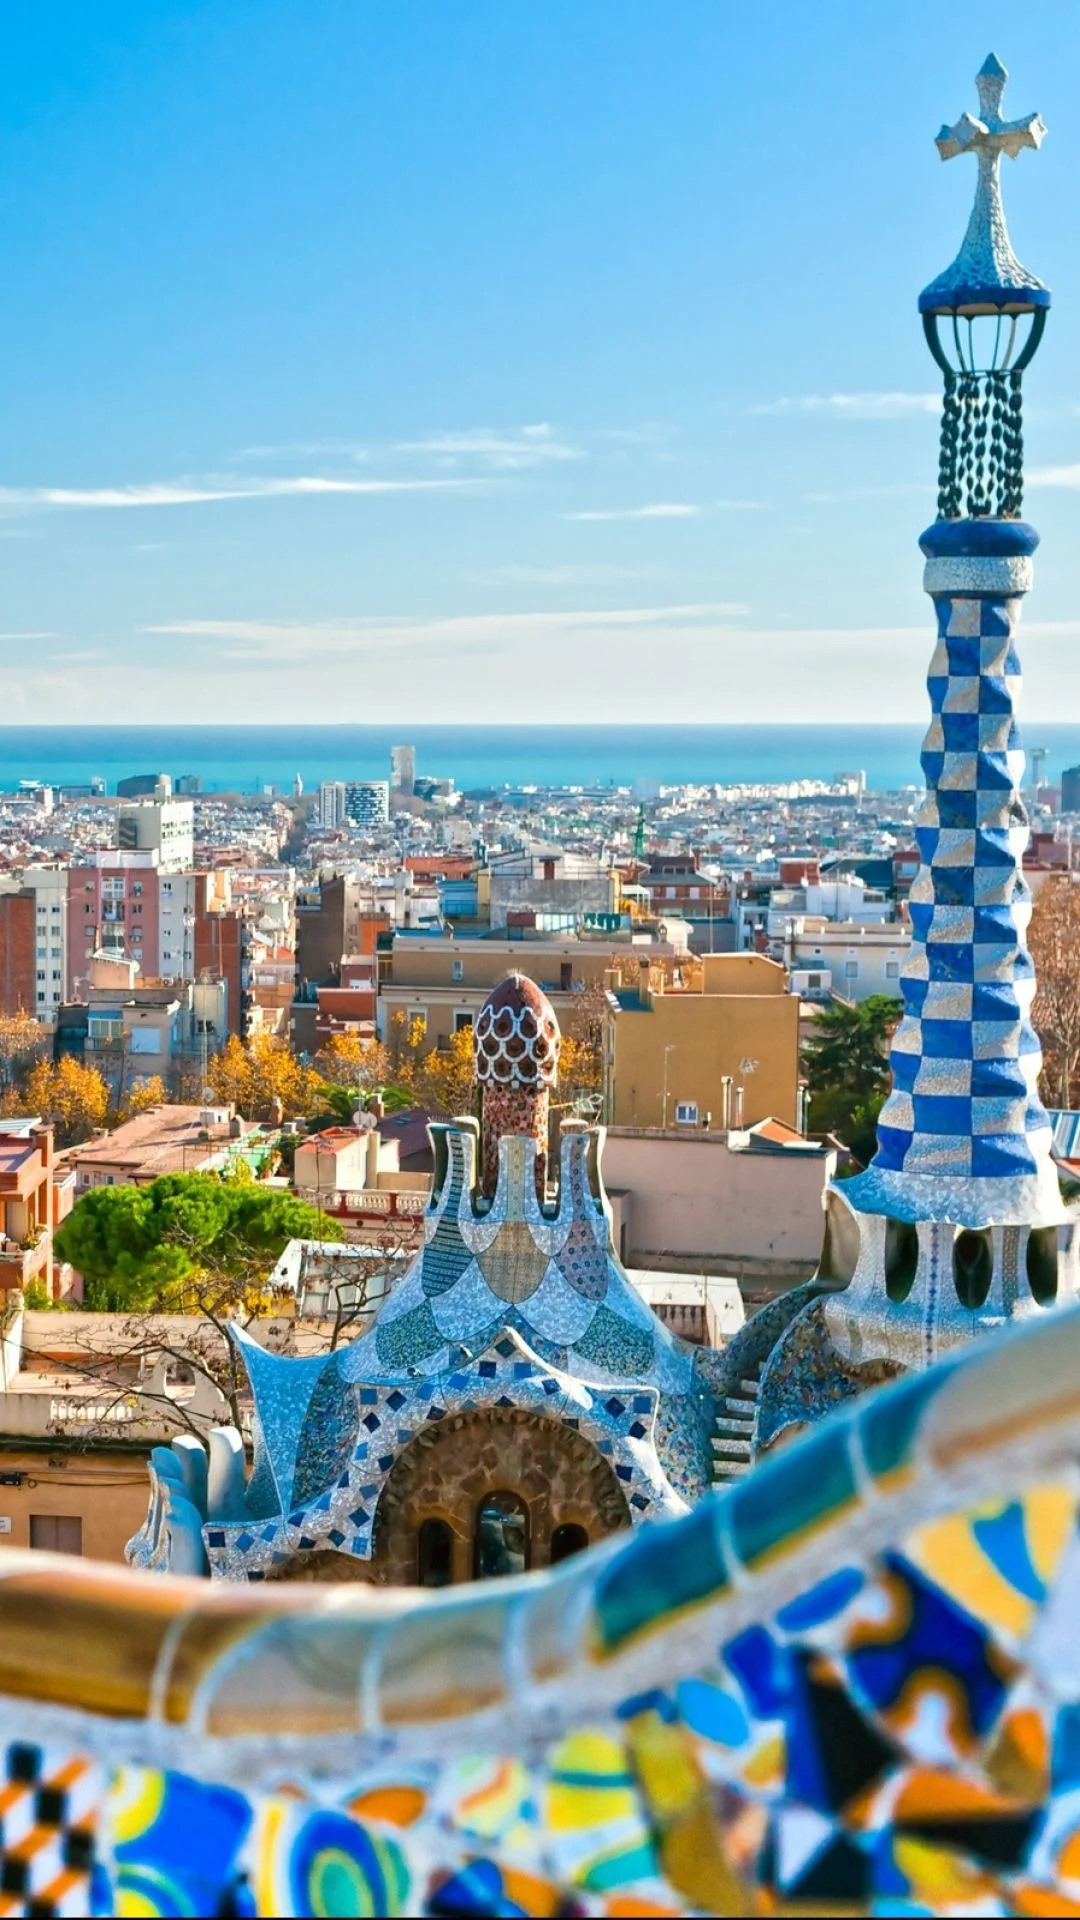 Barcelona City: Architecture, Urban design, Gaudi, Spanish city. 1080x1920 Full HD Wallpaper.